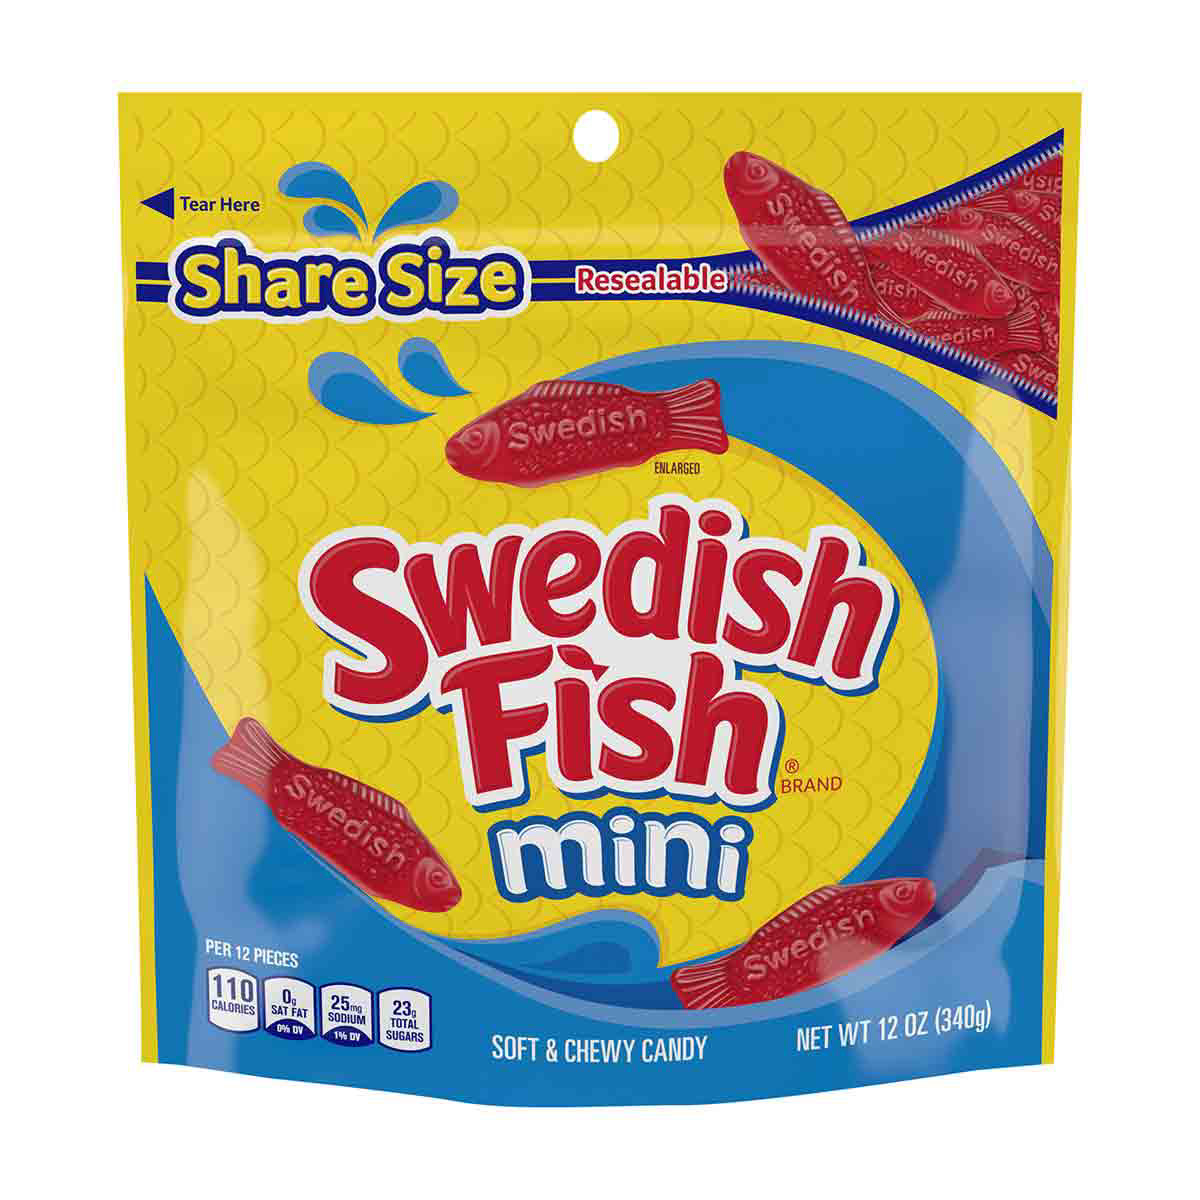 Swedish Fish Mini Soft & Chewy Candy - Share Size, 12 oz